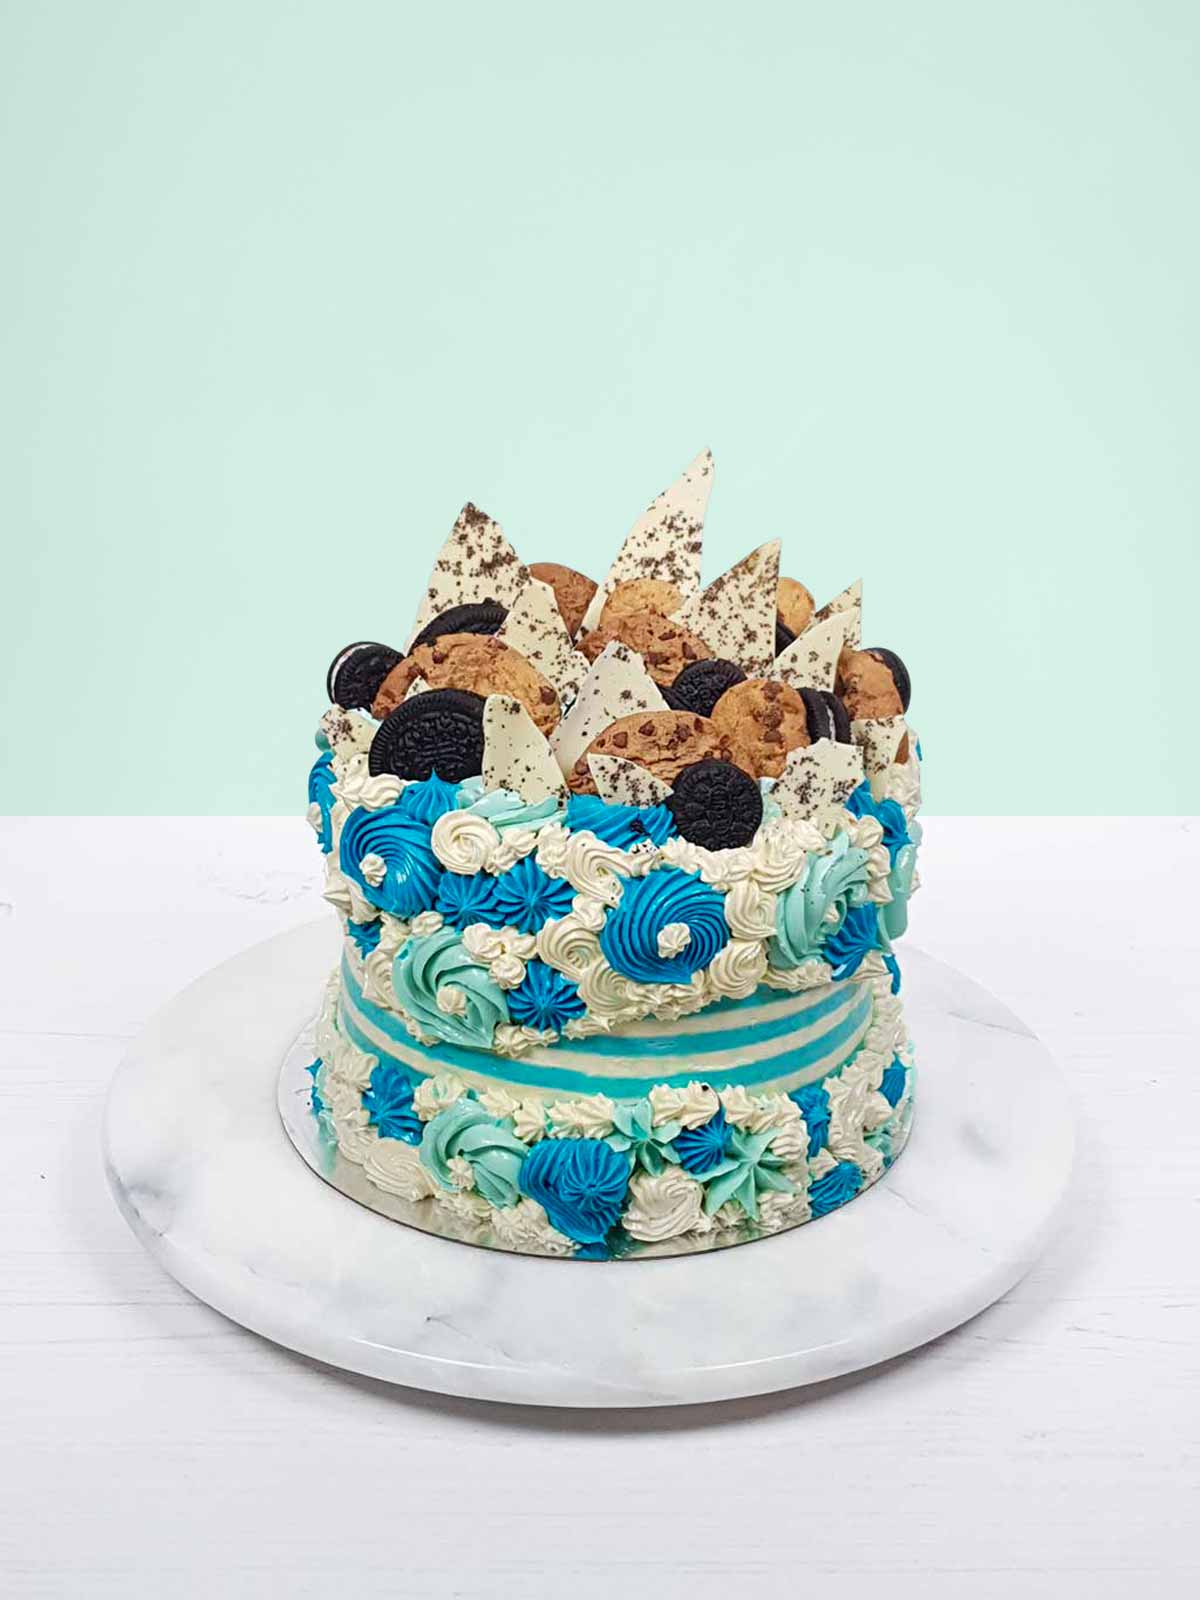 Cookie Monster Deluxe Cake